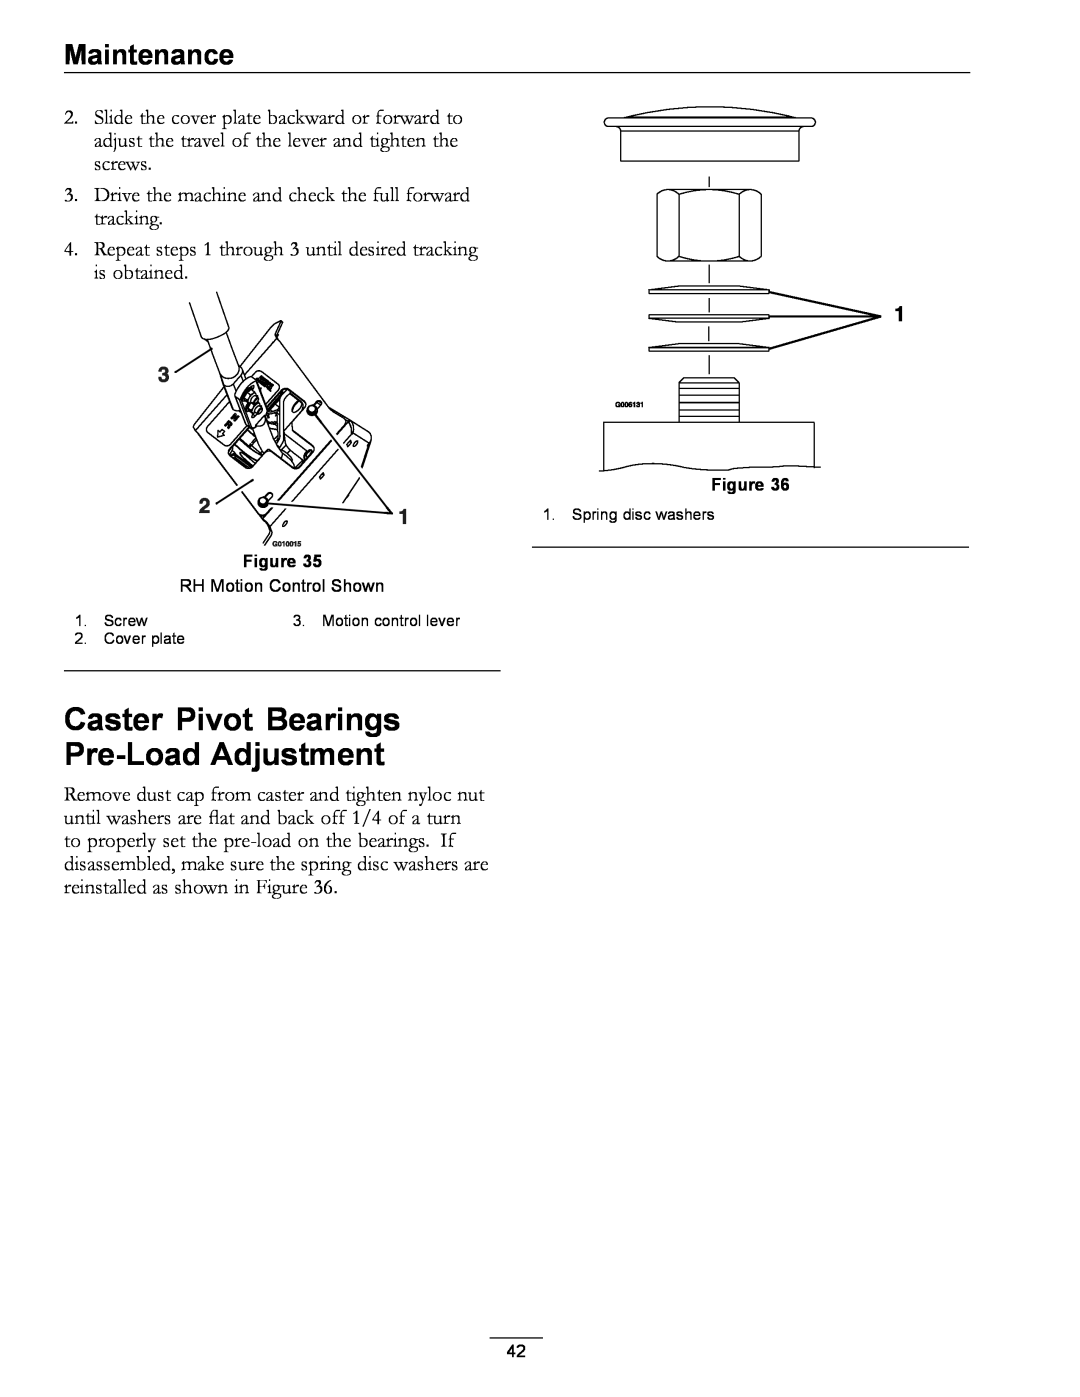 Exmark 000 & higher, 4500-471, S/N 790 manual Caster Pivot Bearings Pre-LoadAdjustment, Maintenance, RH Motion Control Shown 